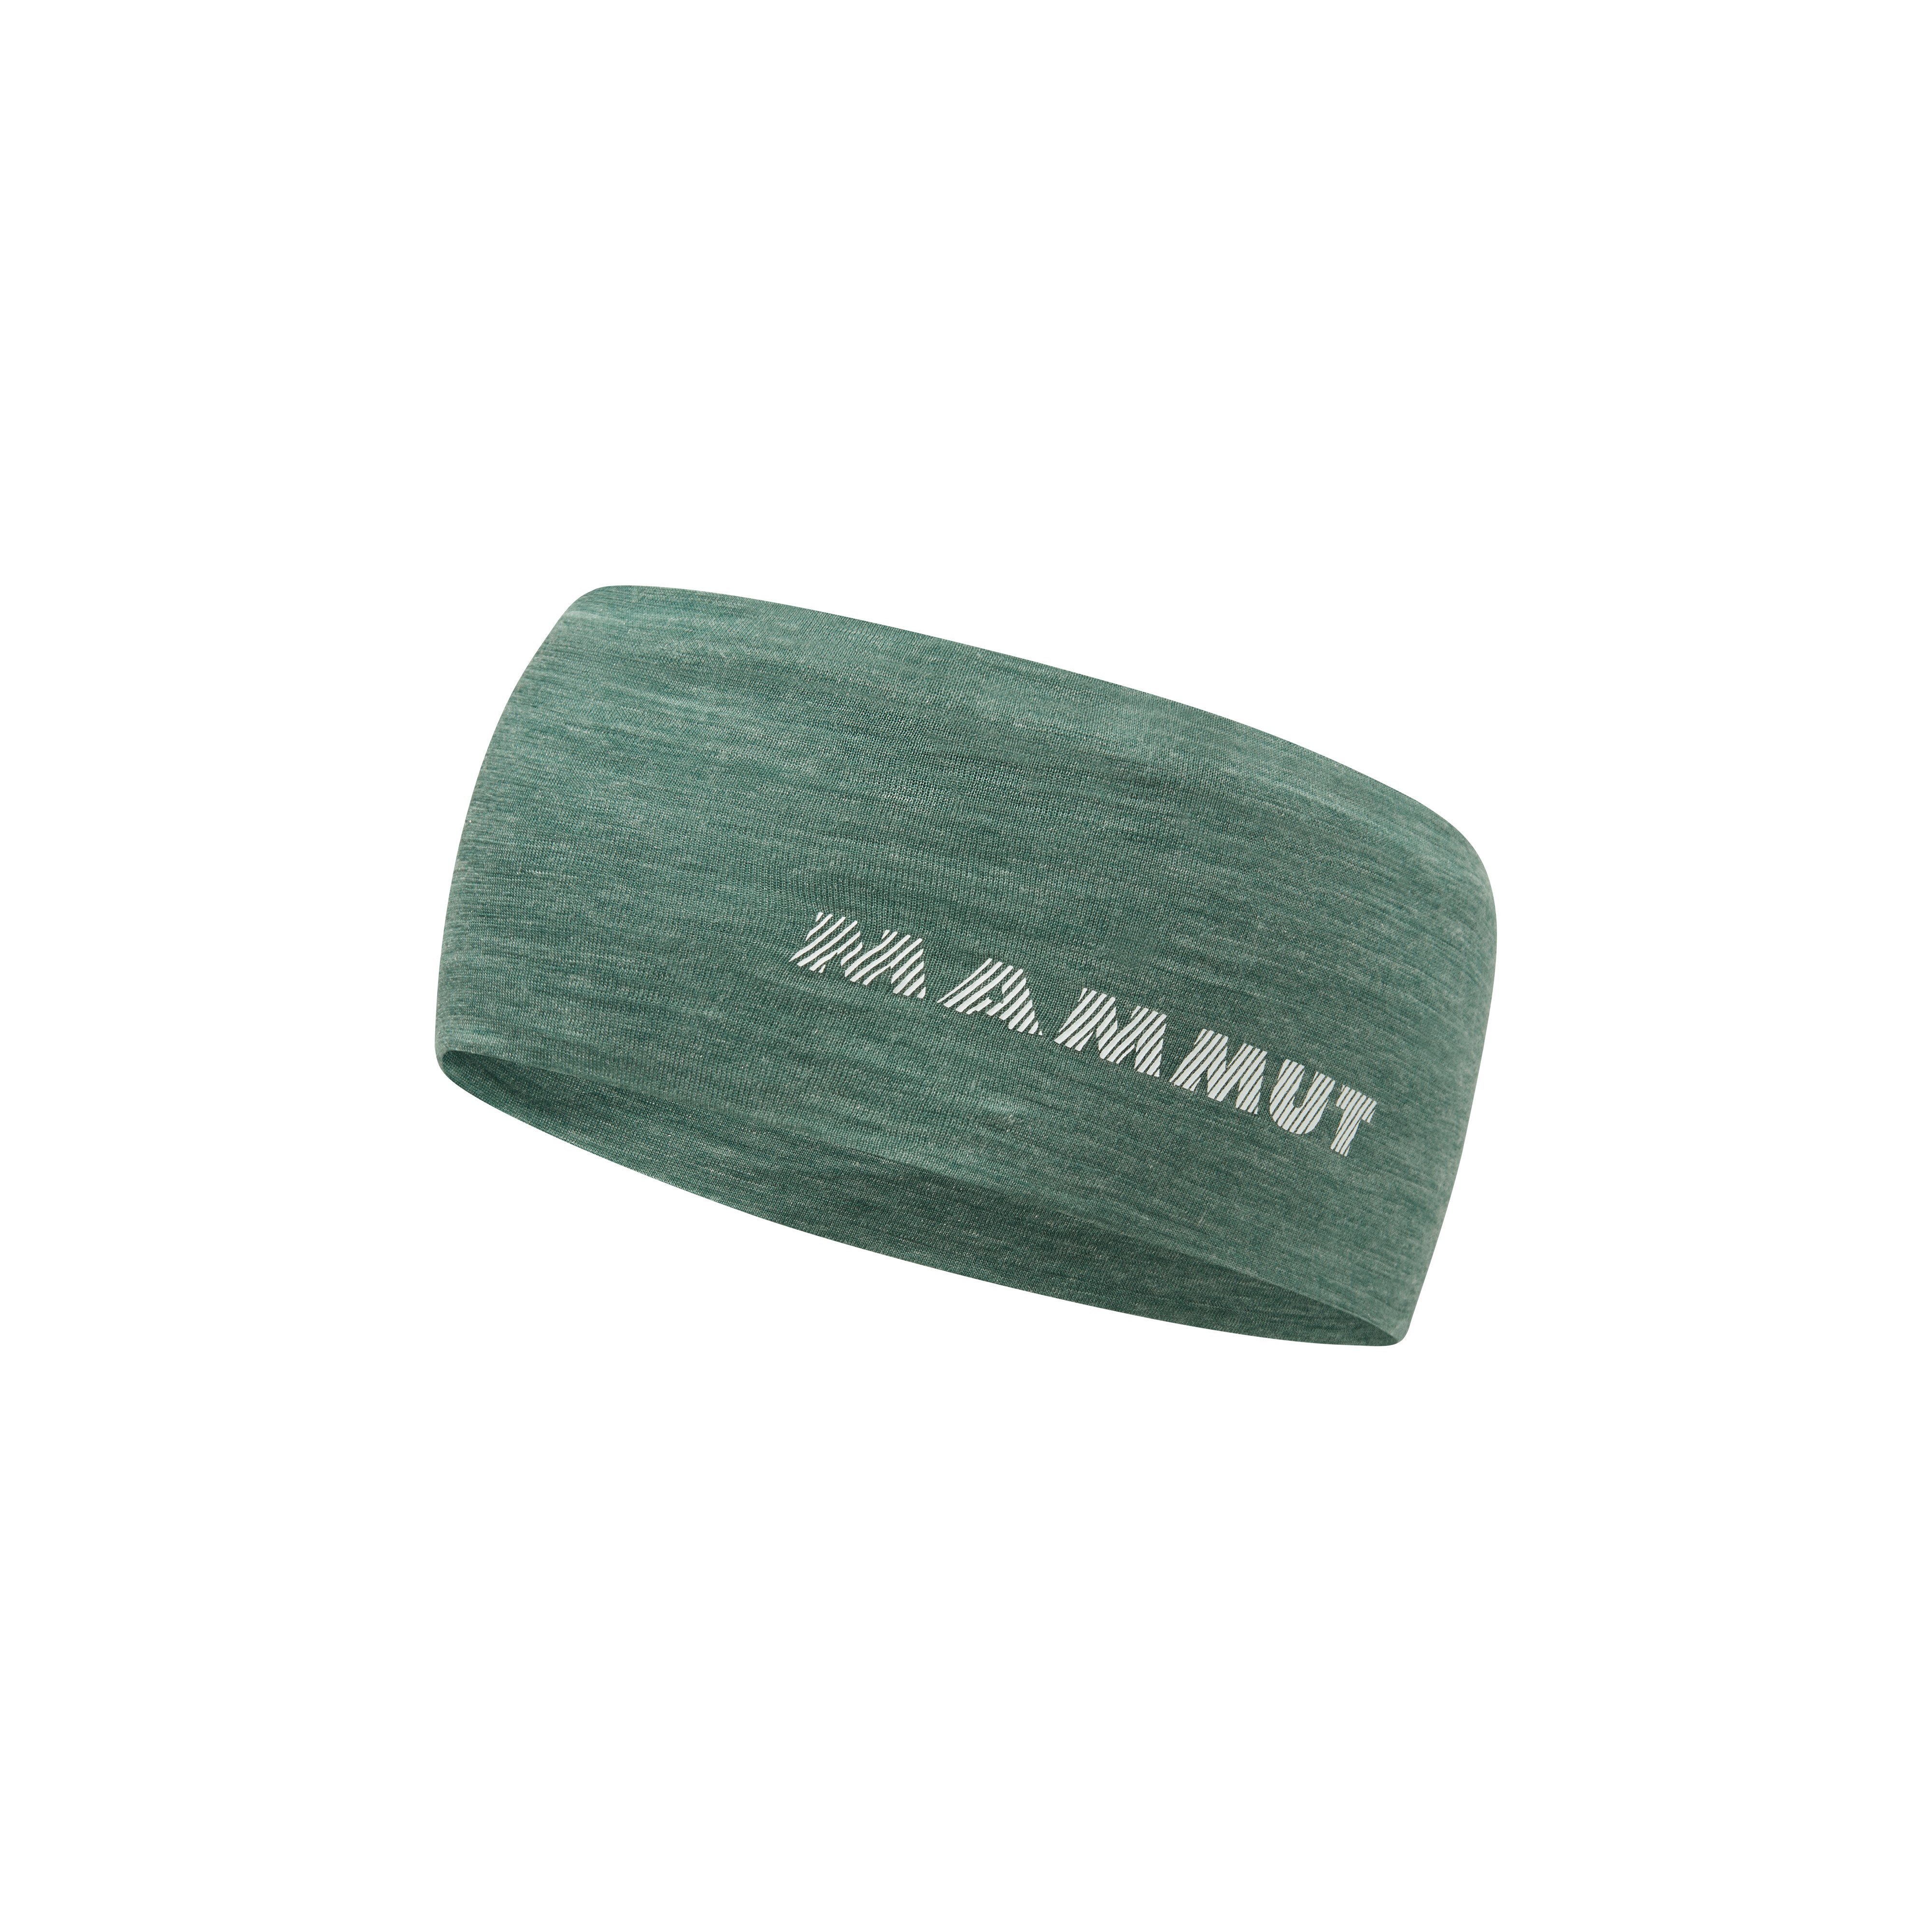 Tree Wool Headband - dark jade melange, one size product image